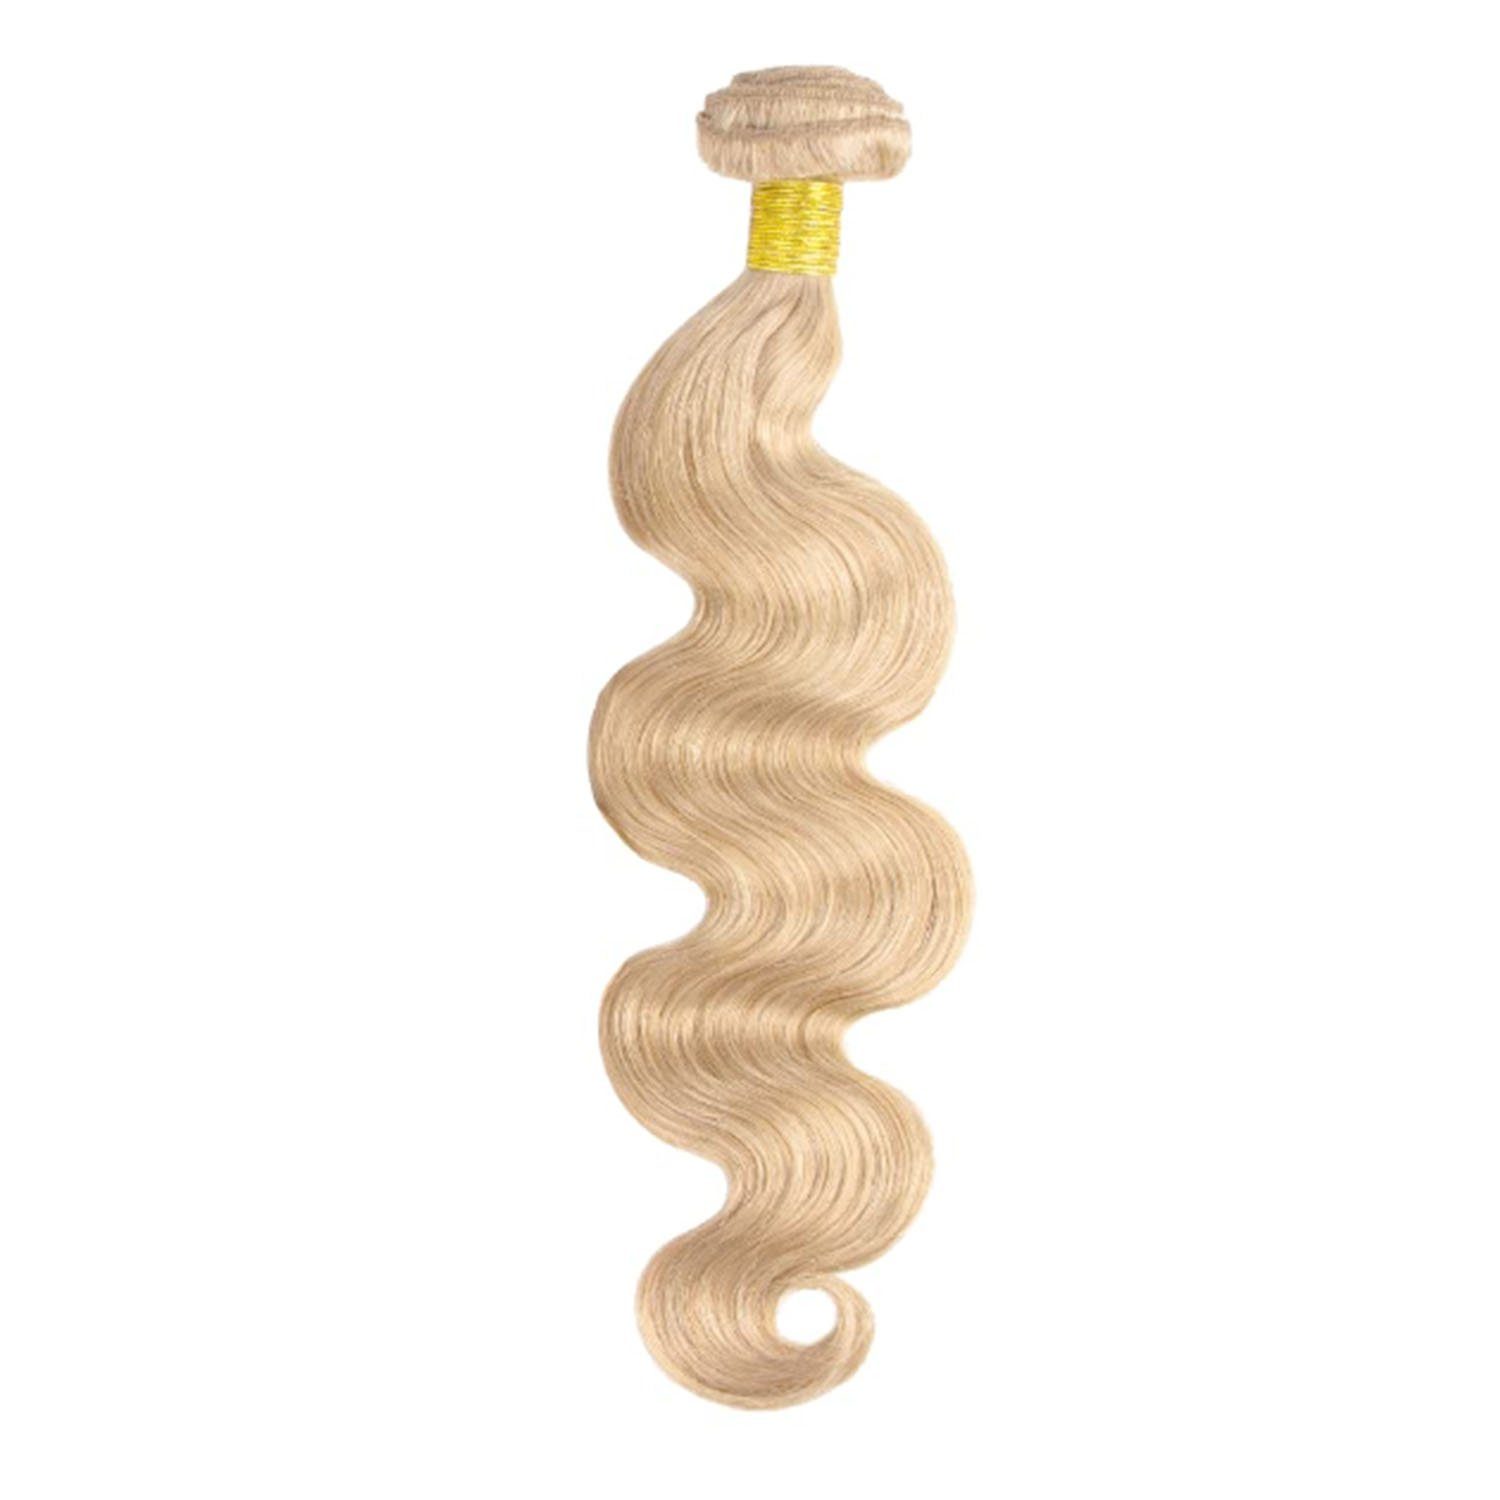 Hair Gold Kunsthaarperücke MAGICSHE Hell Bundle, 613 Curly Wave Perücke